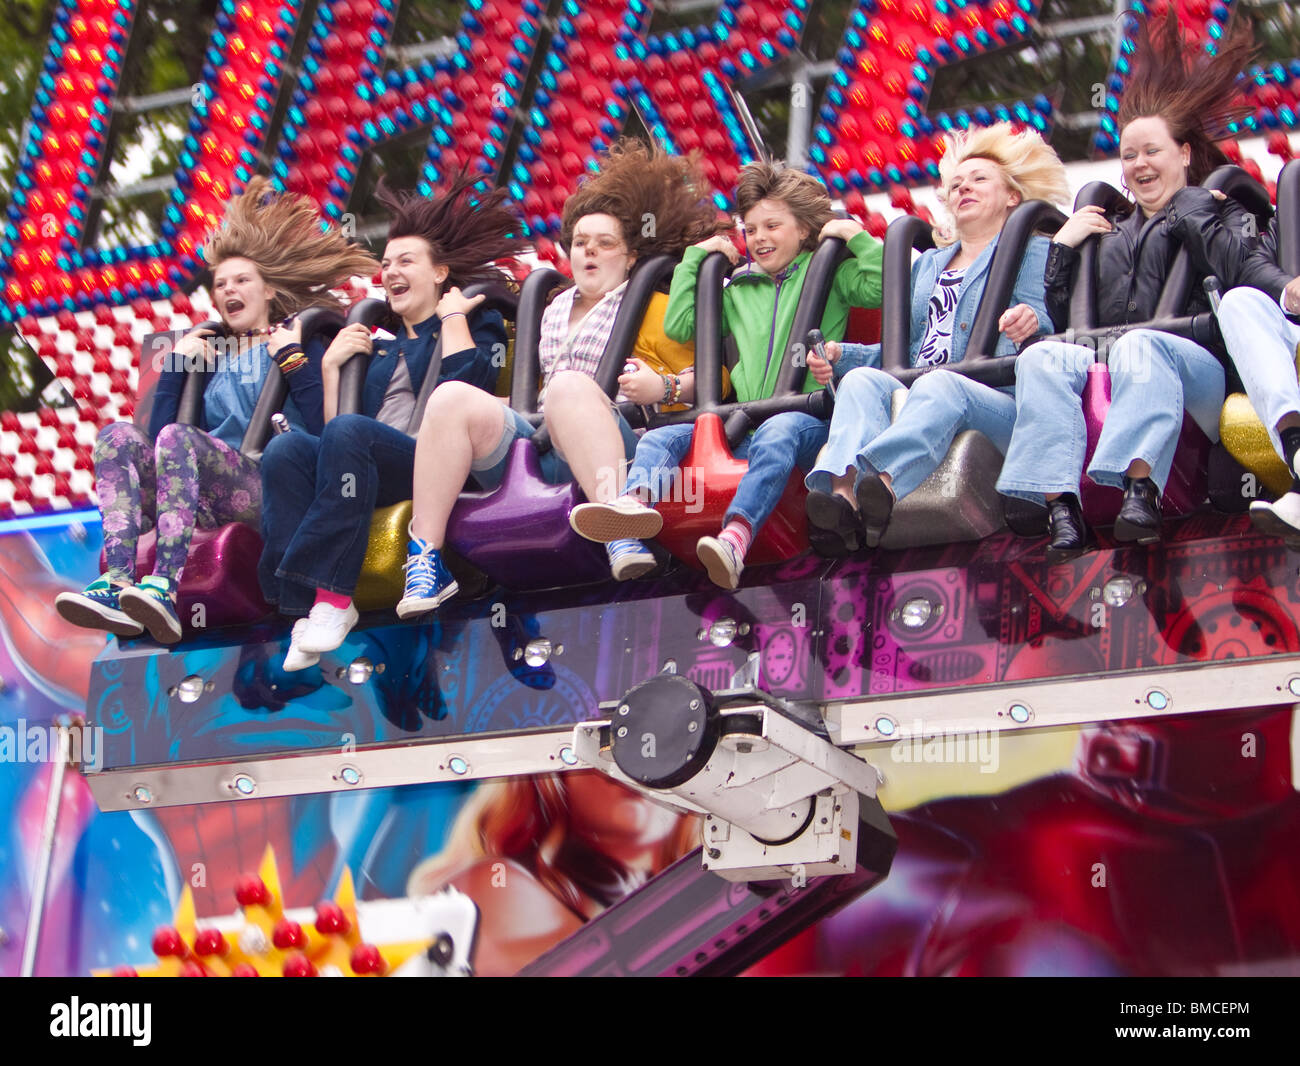 Six women screaming on a fairground ride Stock Photo